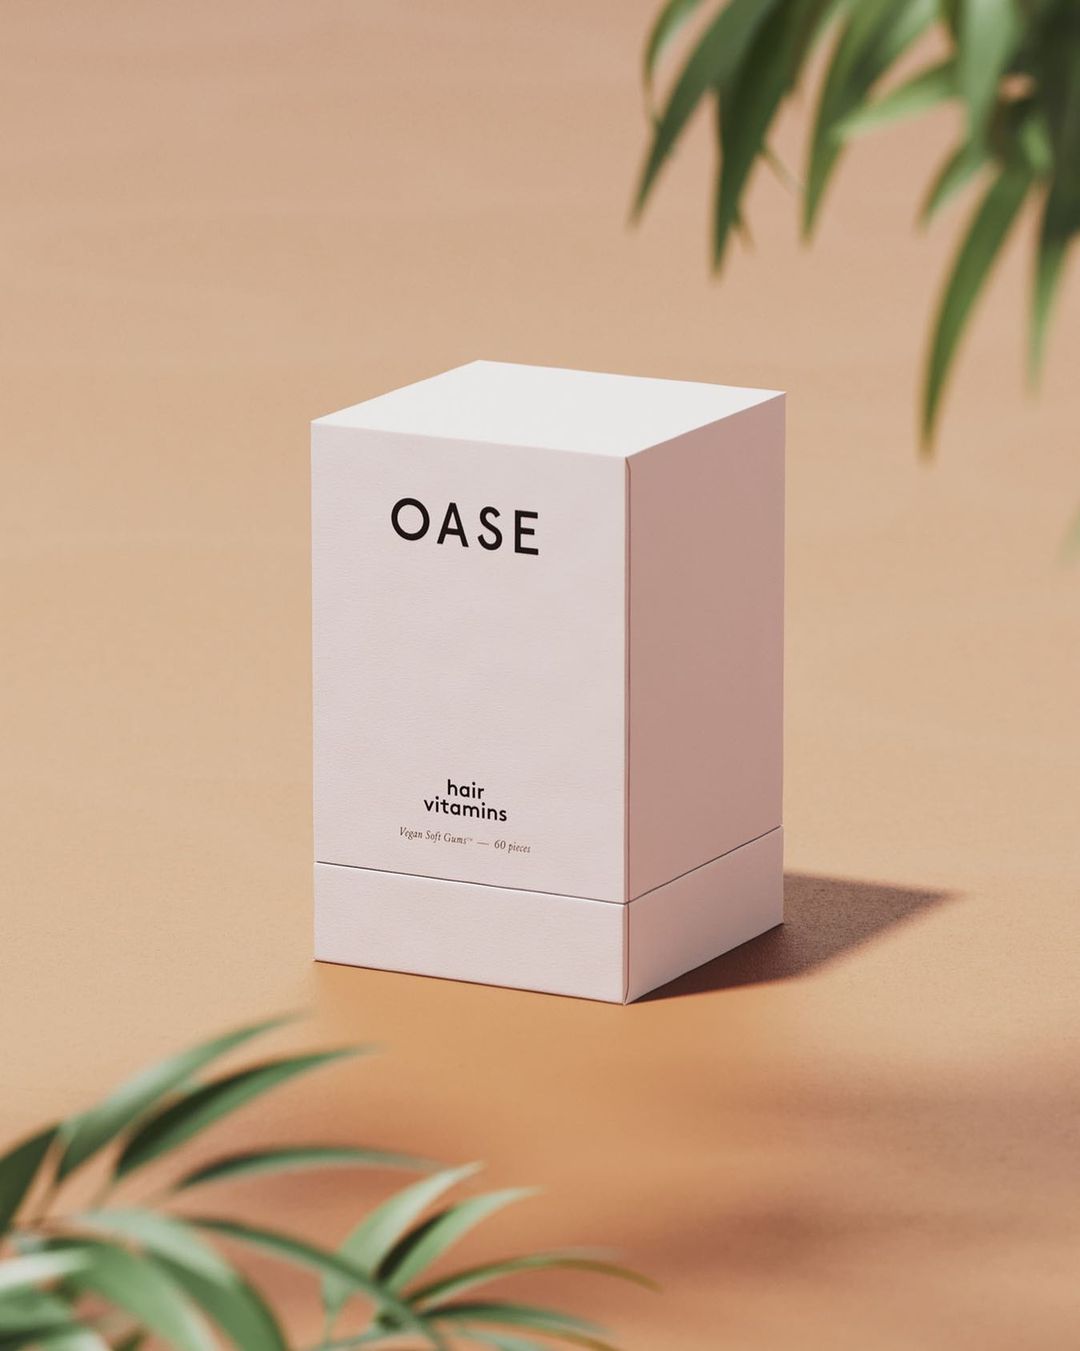 OASE-护发维生素-化妆品-品牌包装设计图3